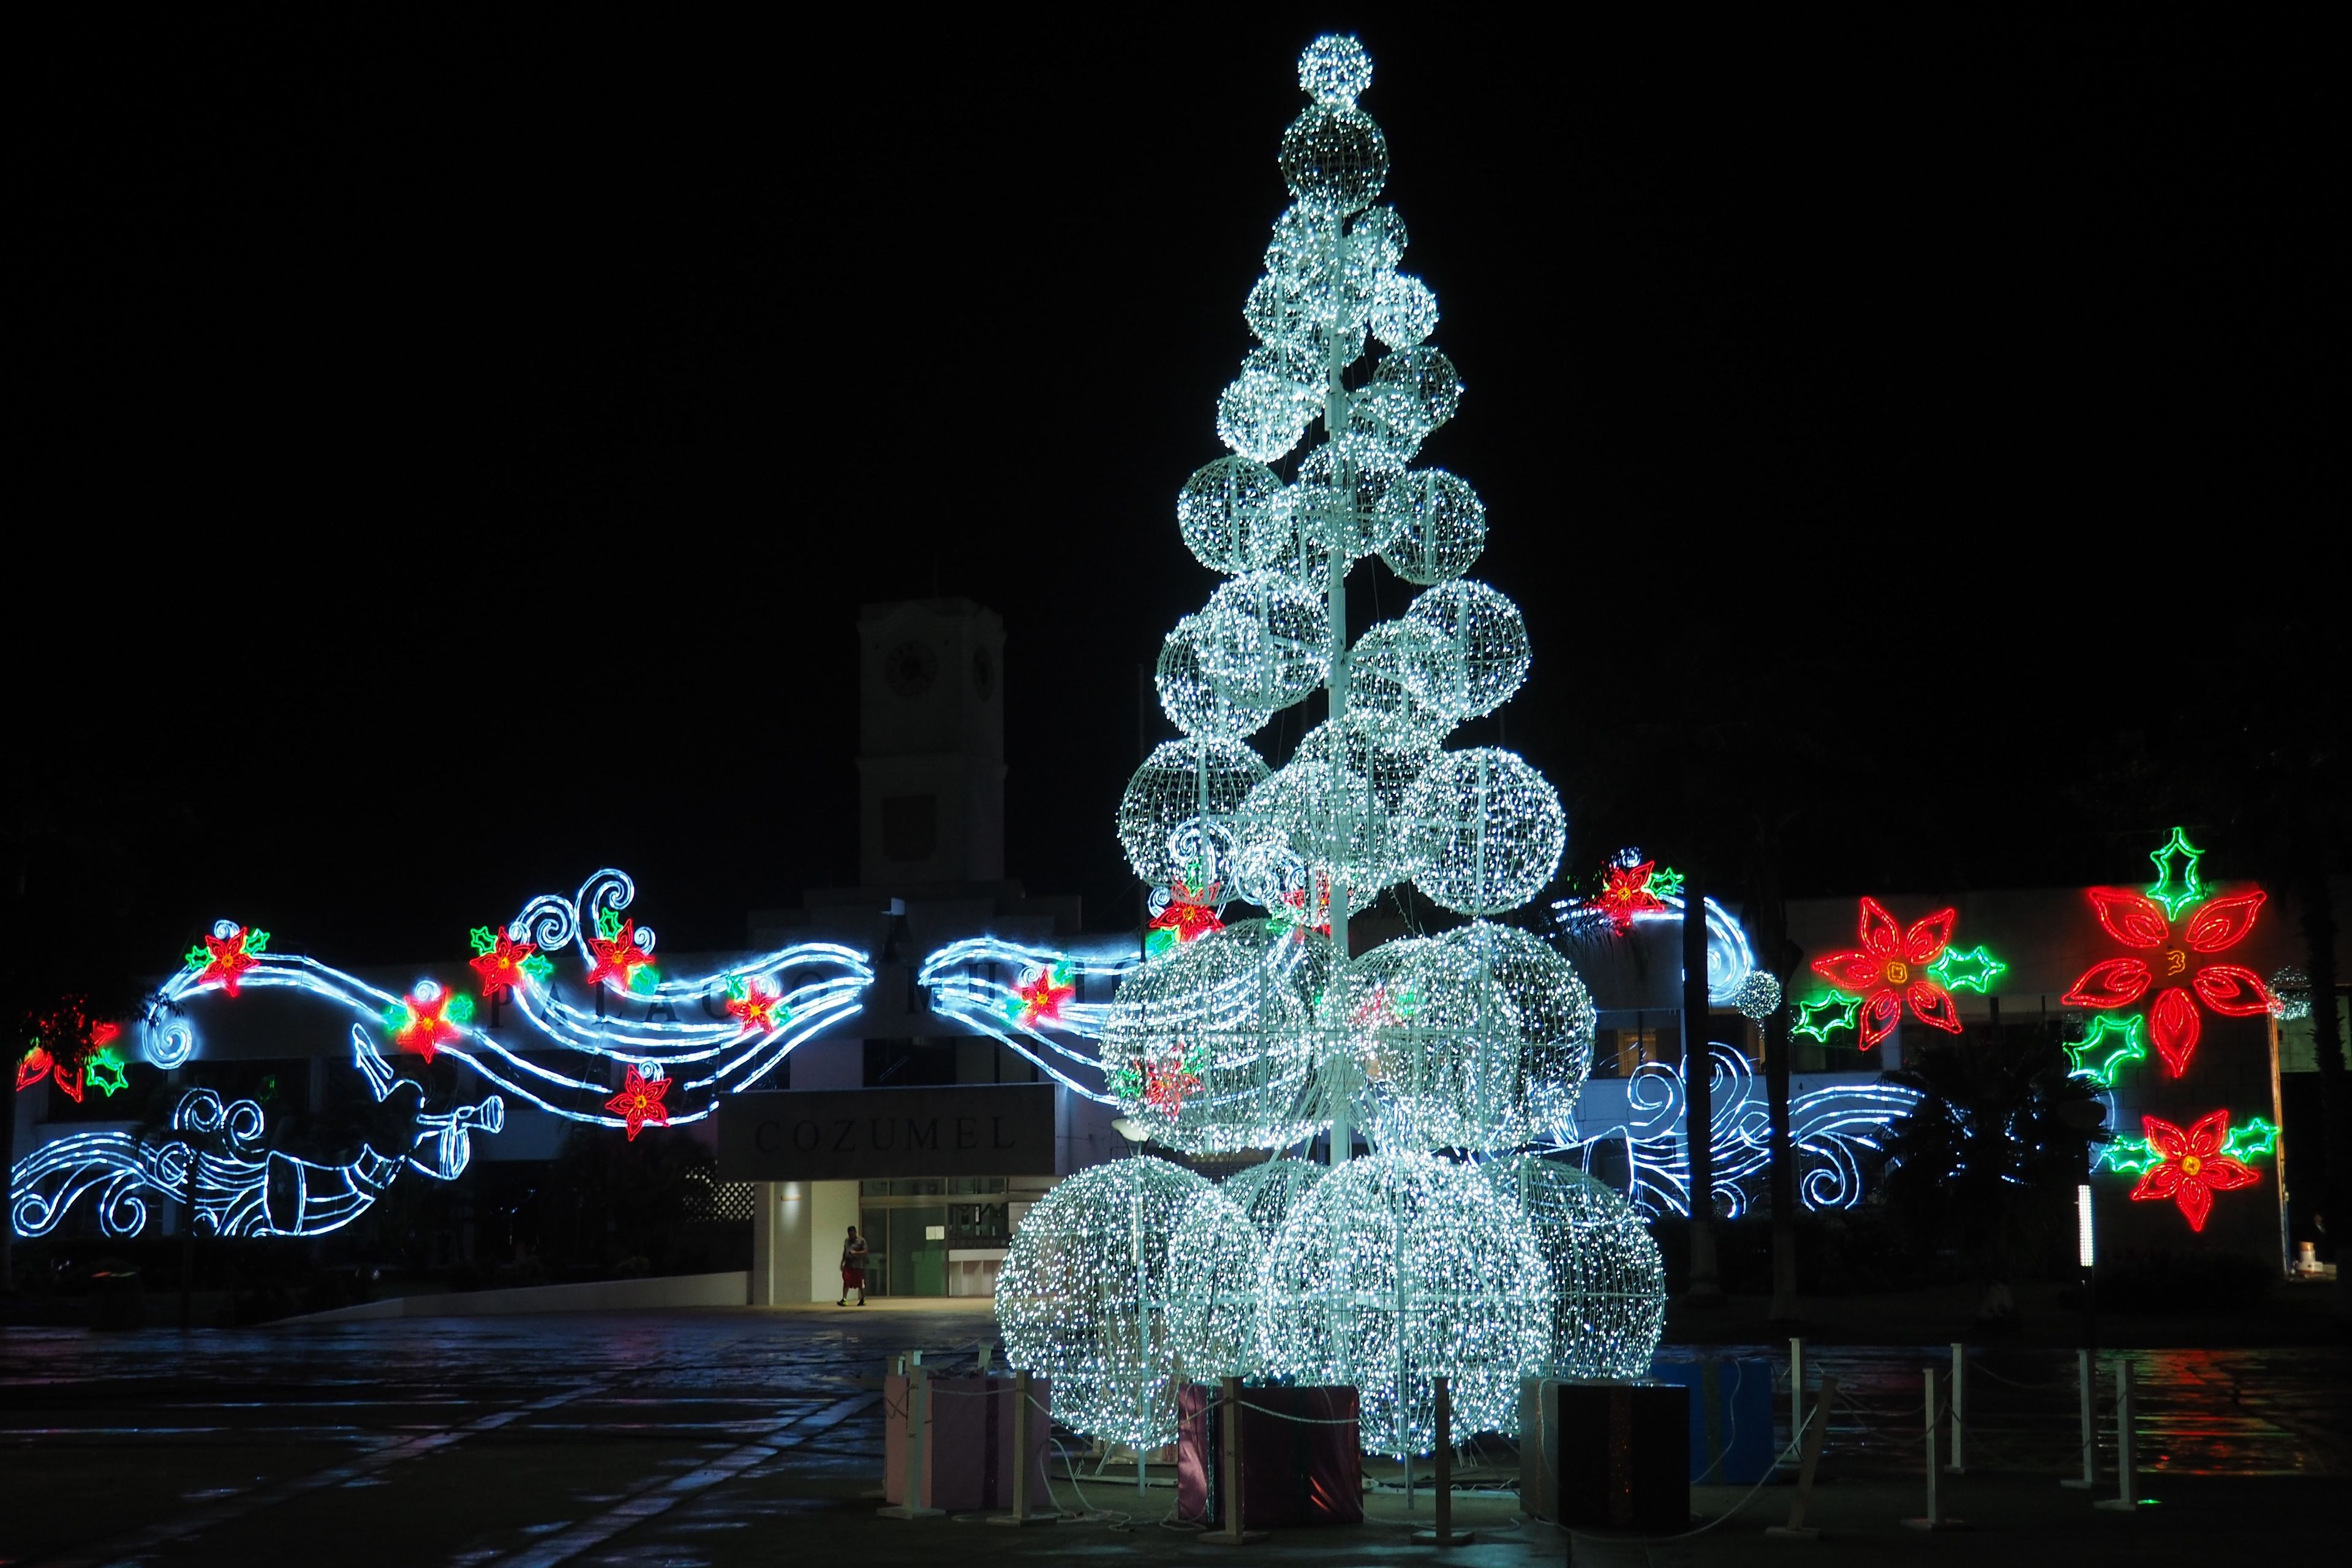 Illuminated Christmas tree in Cozumel, Mexico, at night.